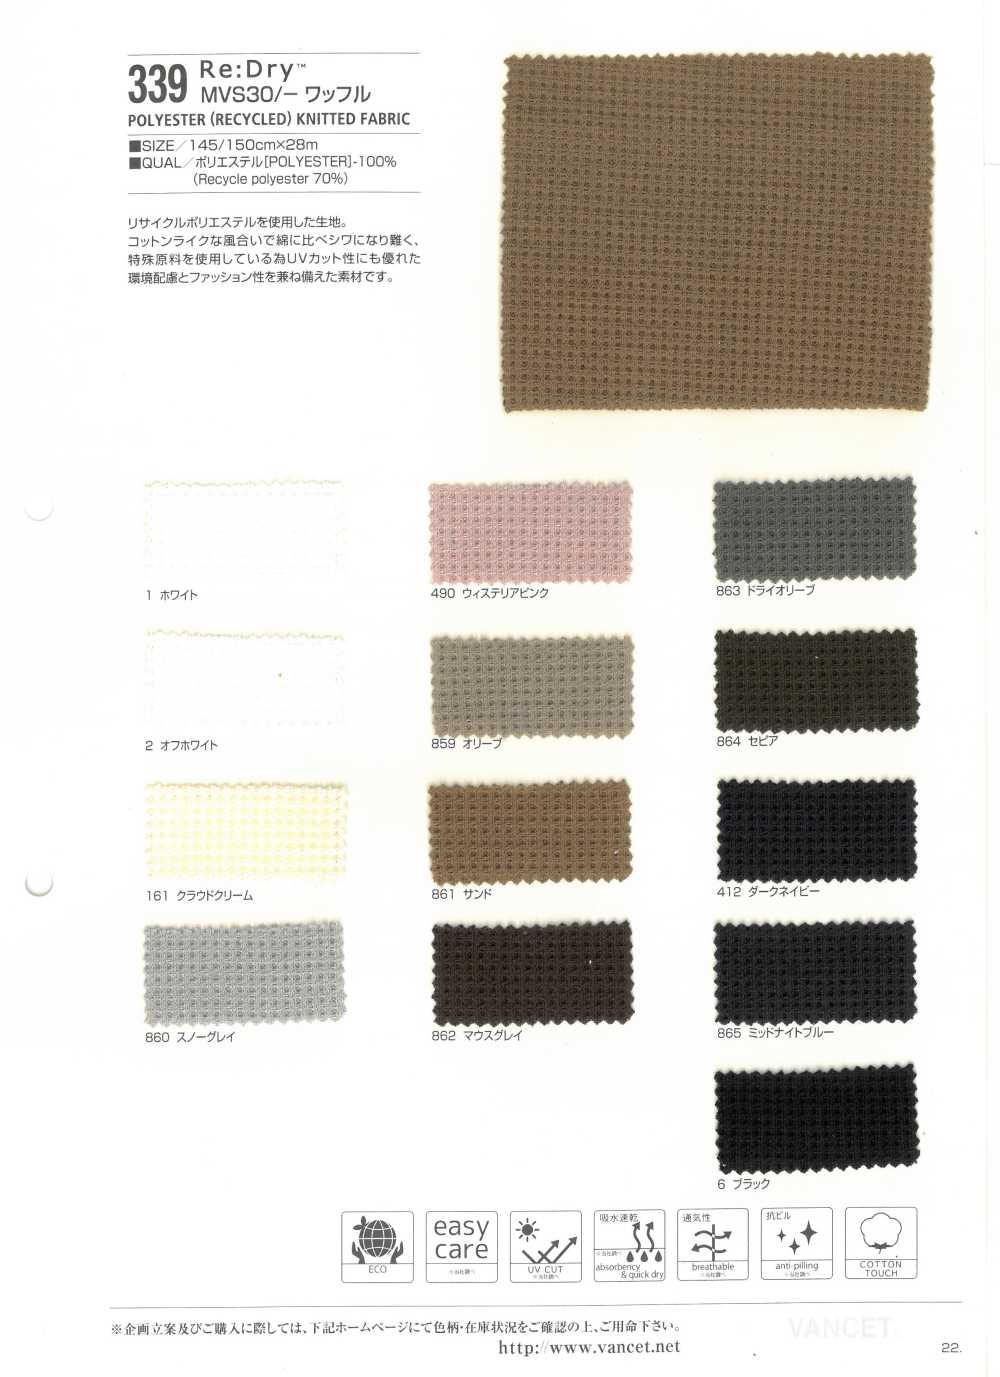 339 Re: Dry (TM) MVS 30 / Waffle Knit[Fabrica Textil] VANCET